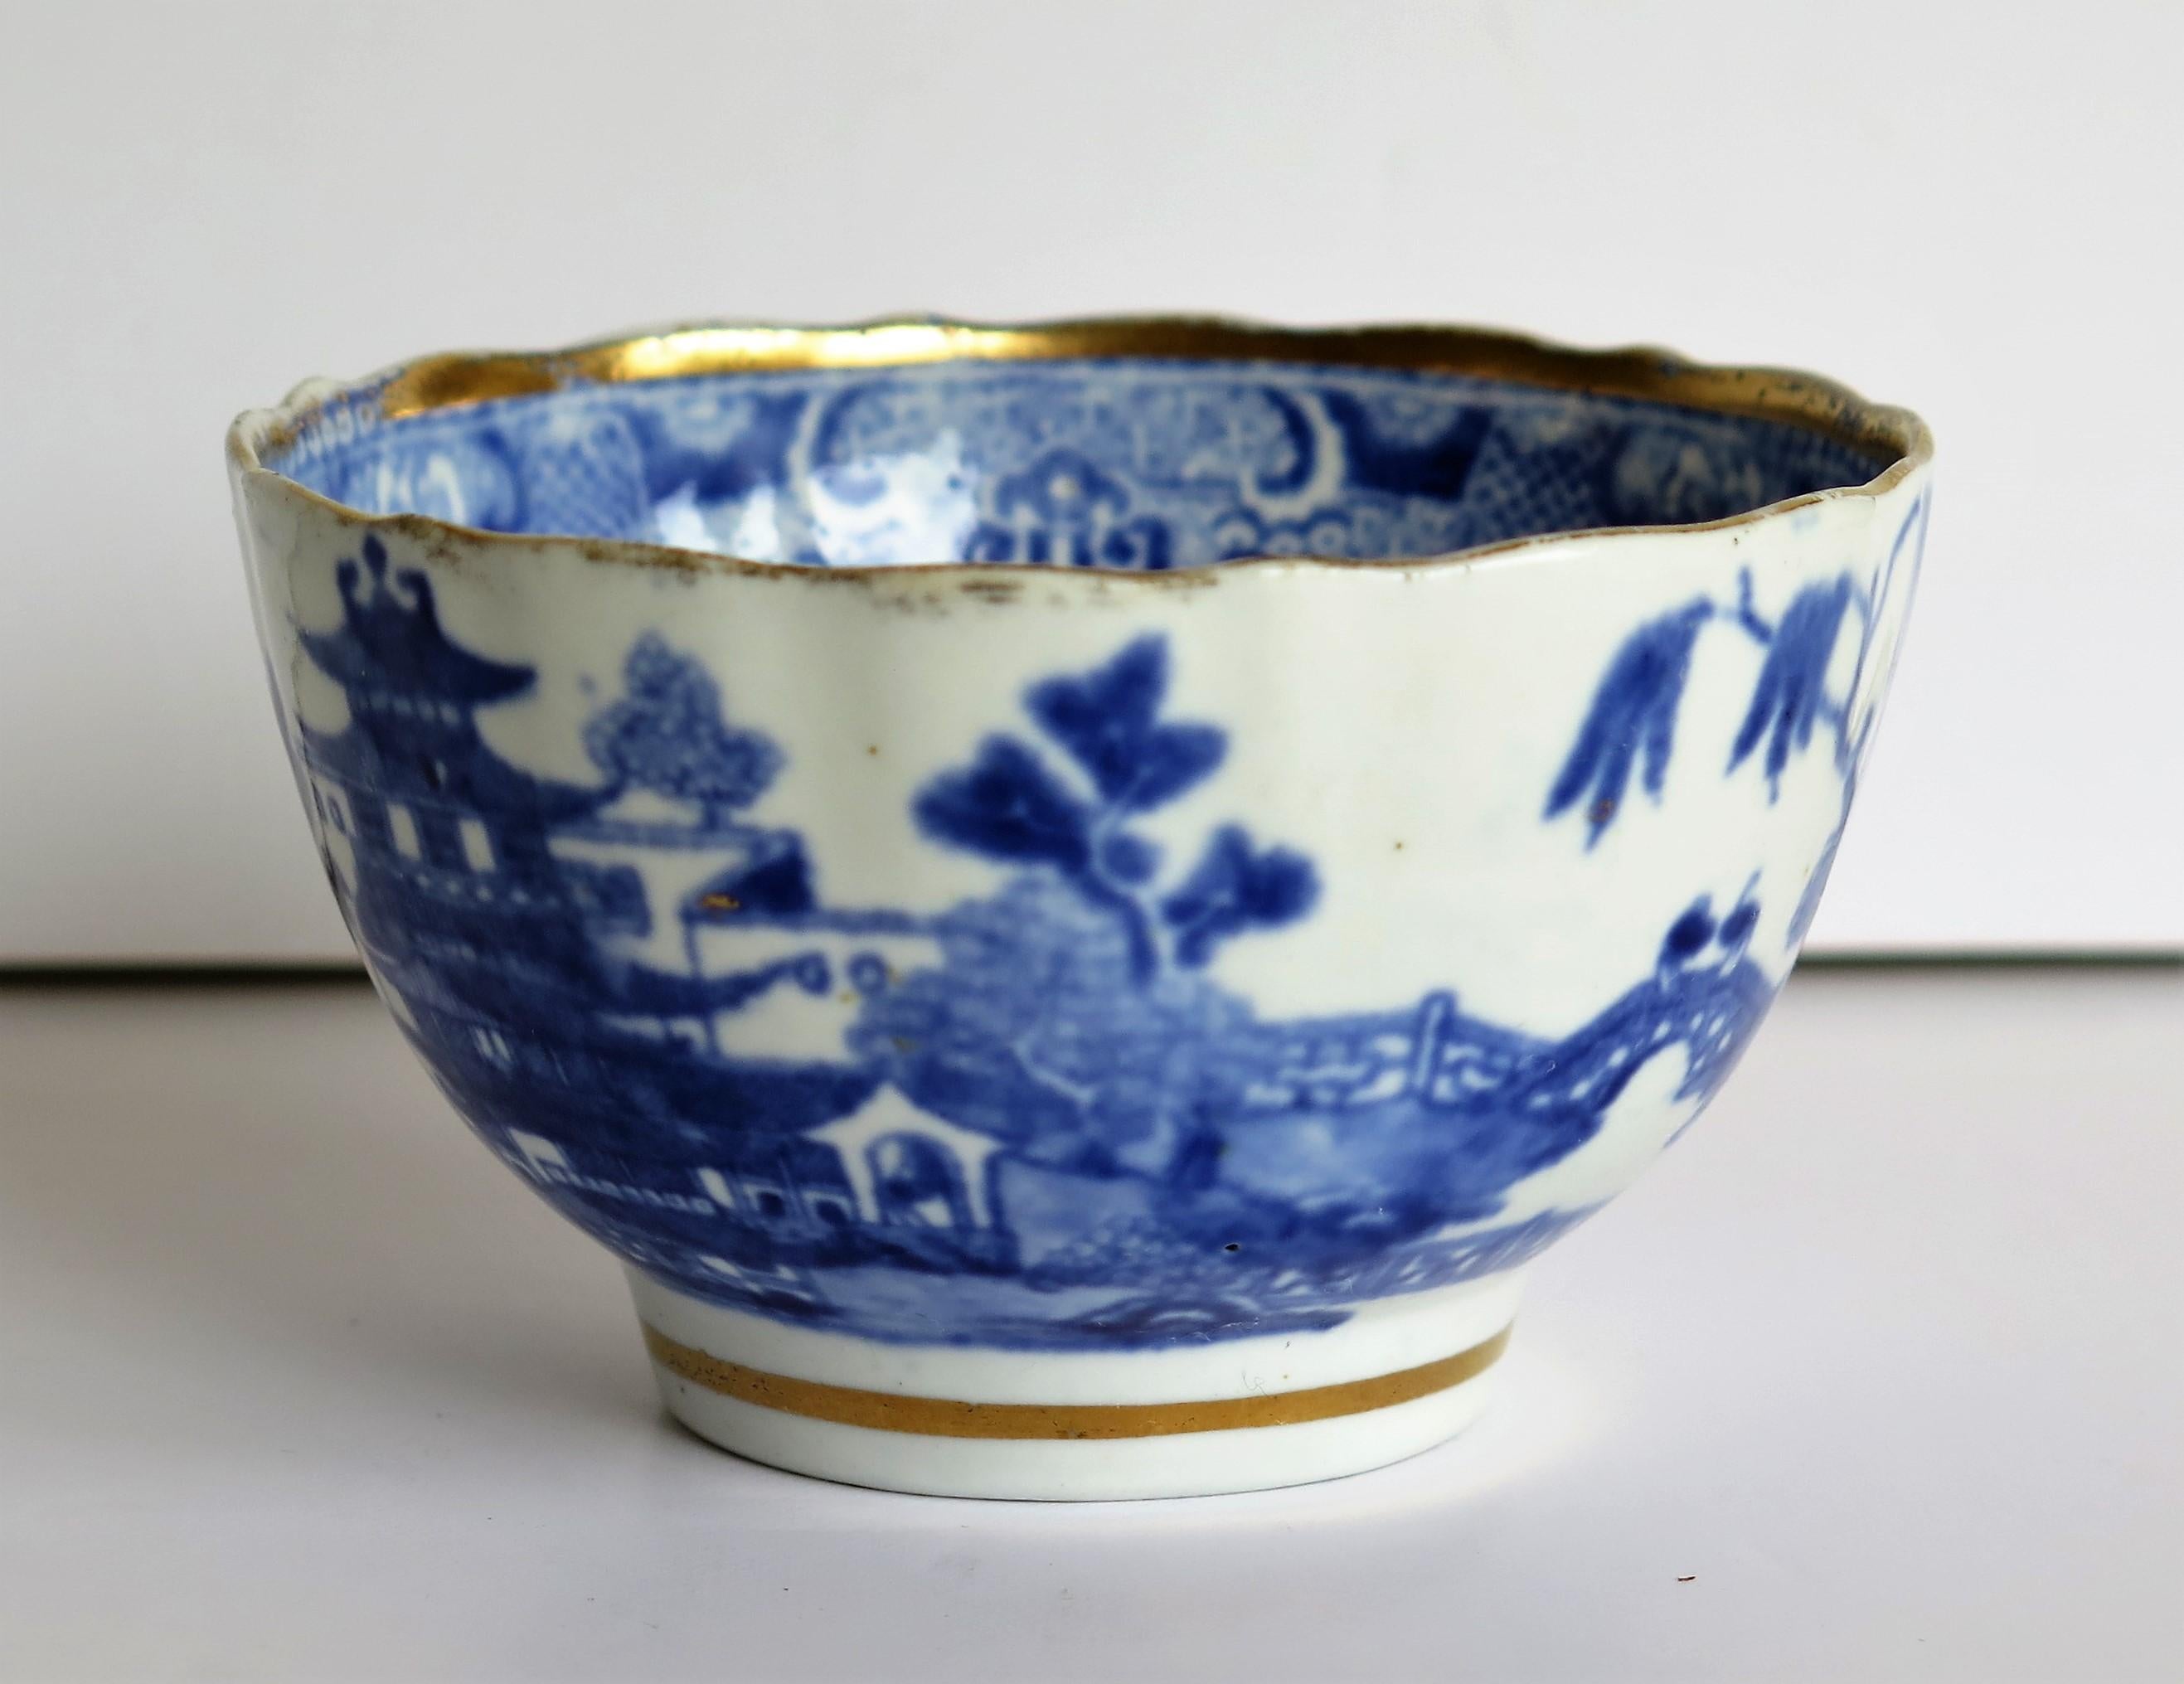 Chinoiserie Miles Mason Porcelain Bowl Blue and White Pagoda Pattern, English, circa 1805